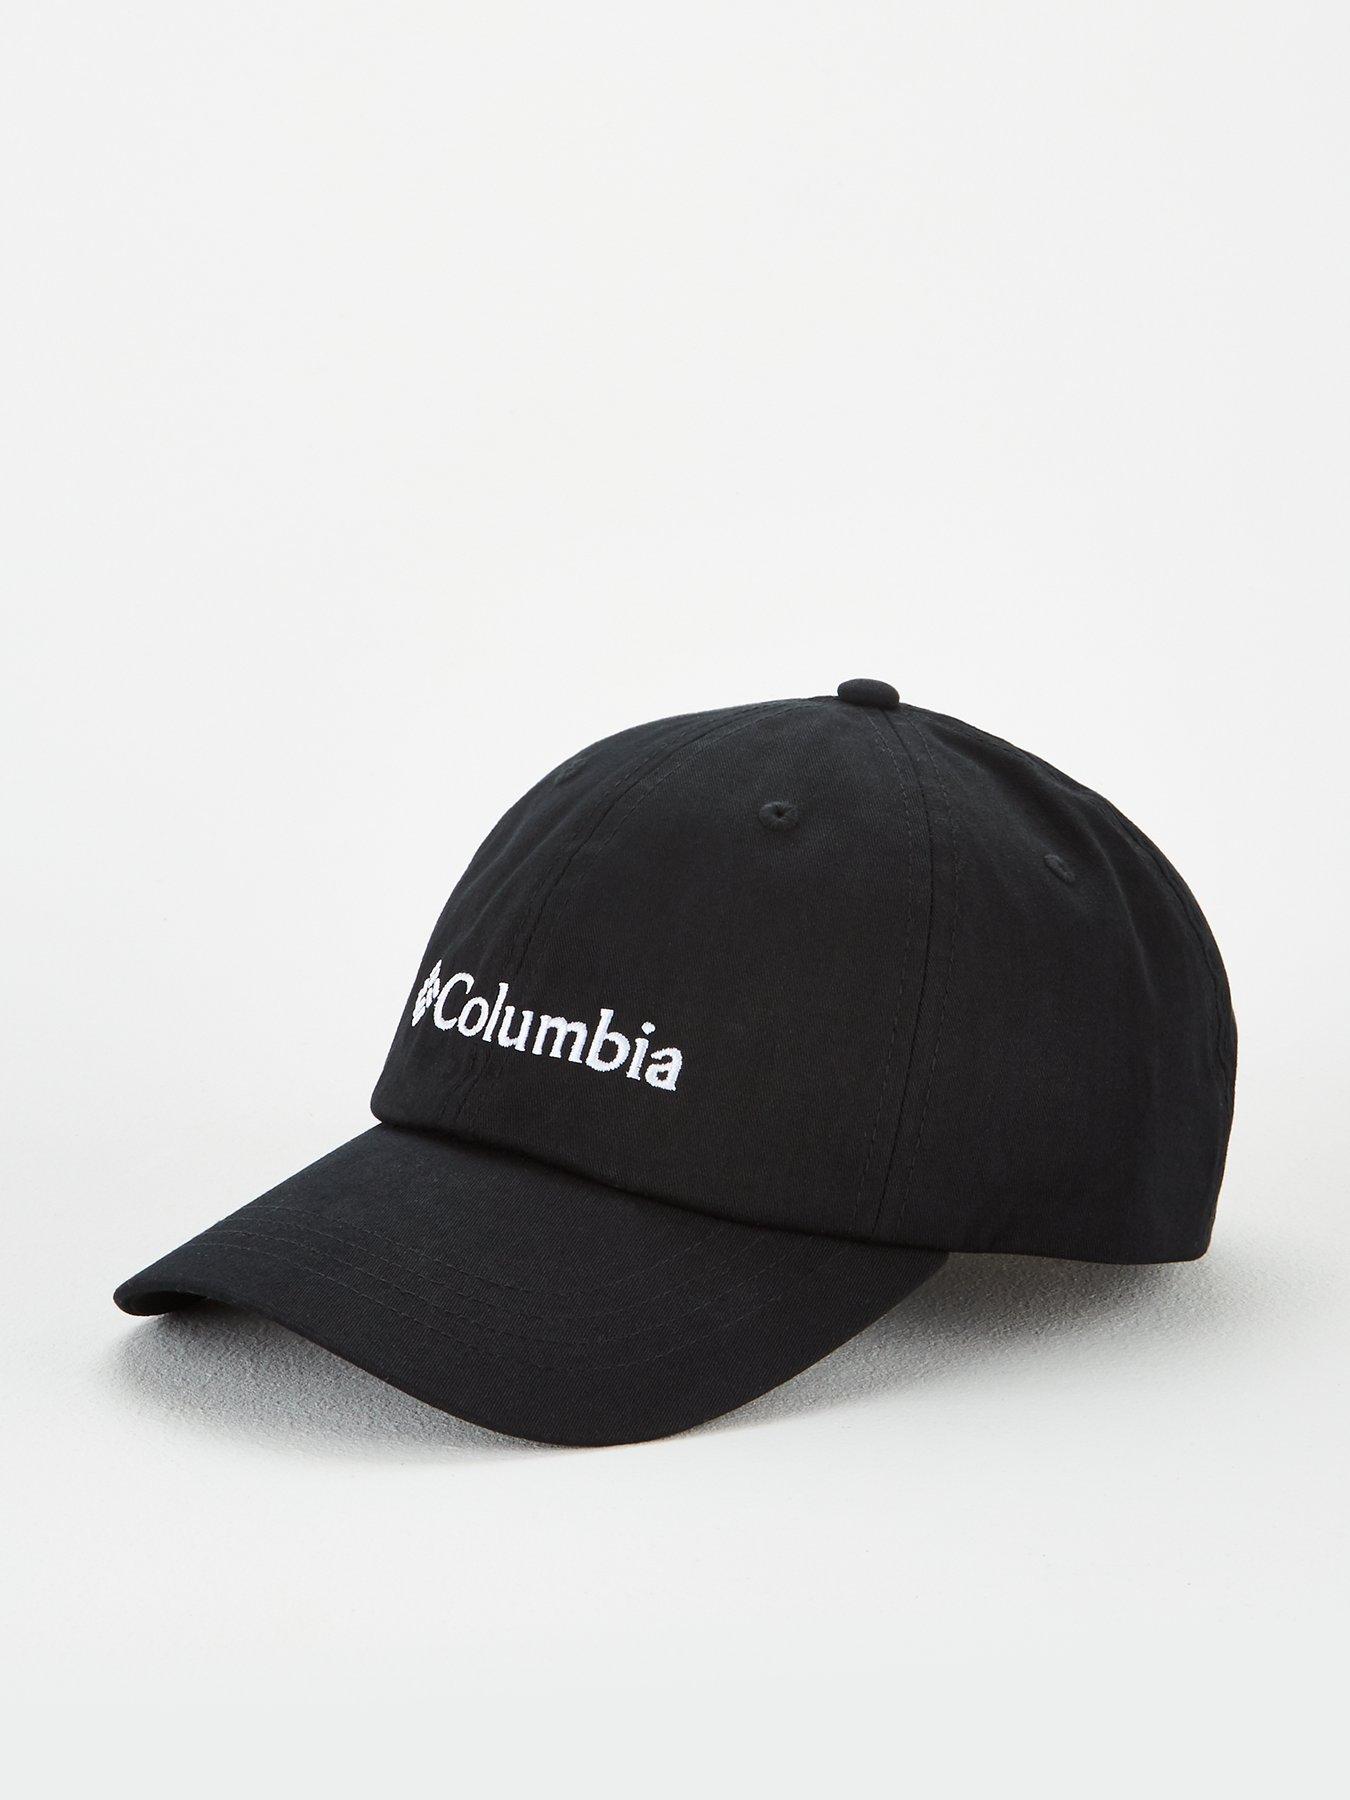 Columbia Men's Roc II Ball Cap - Black